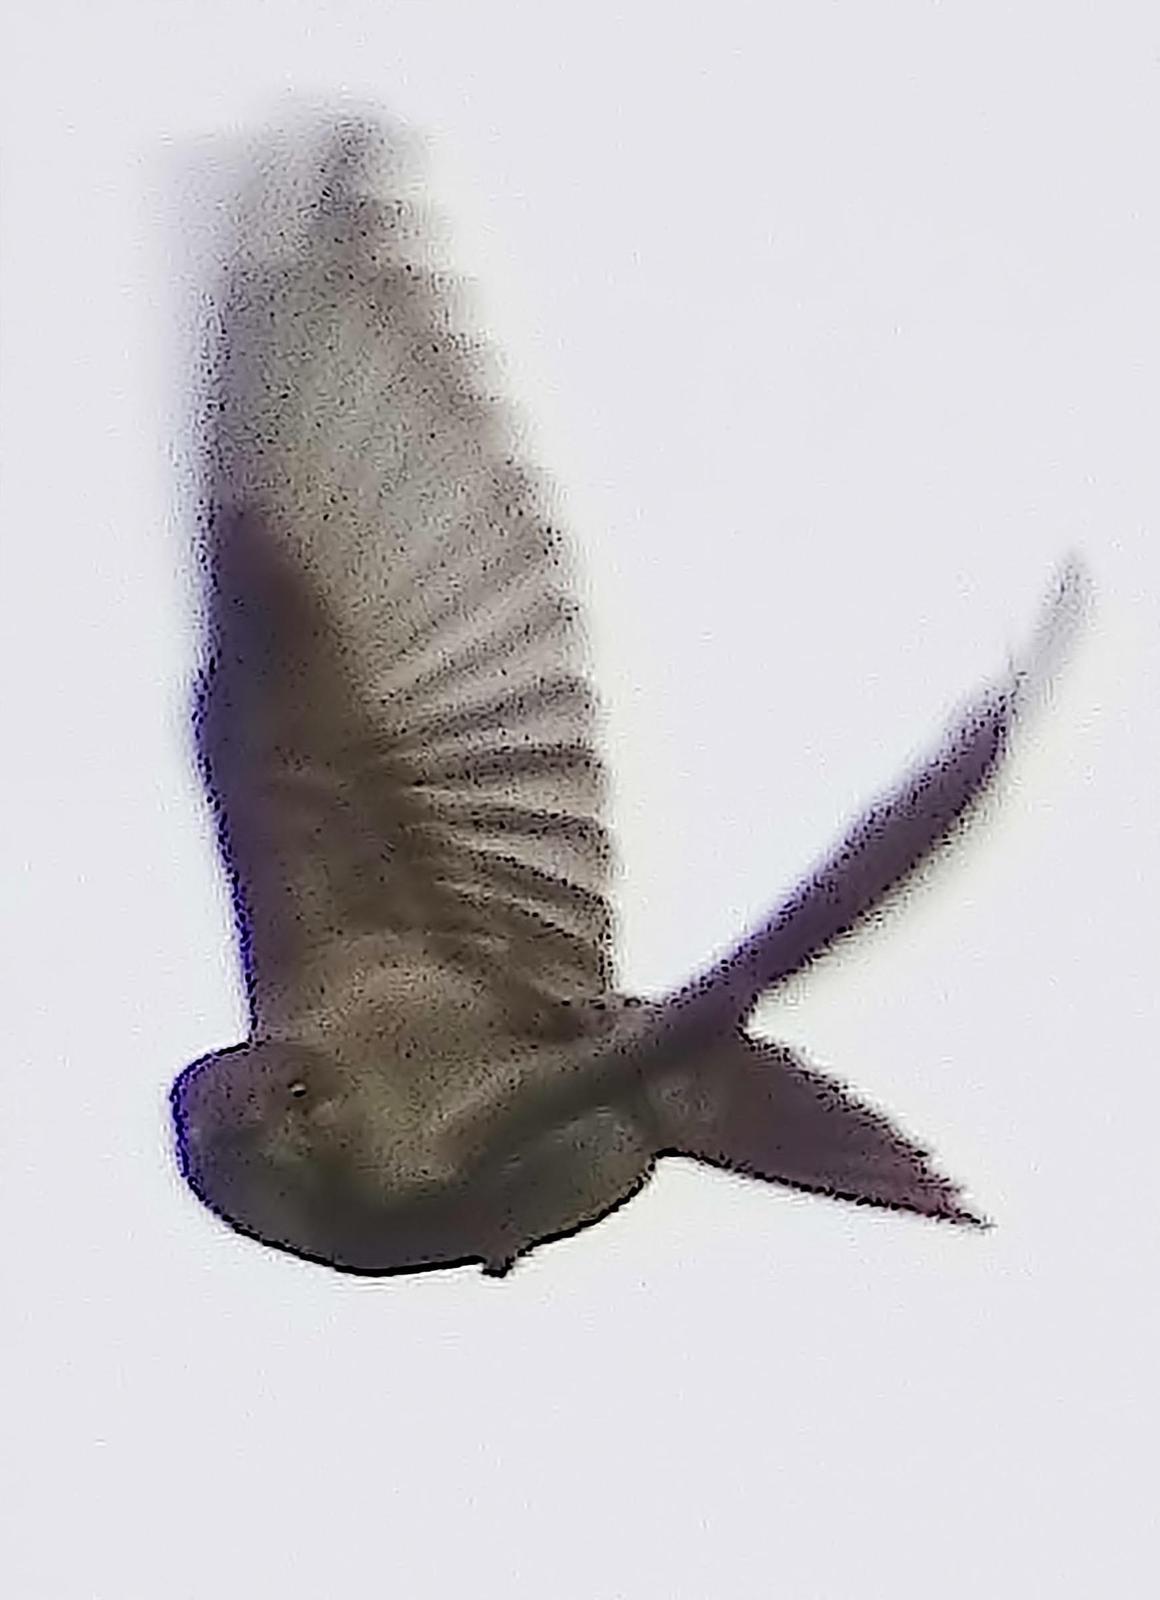 Olive-sided Flycatcher Photo by Dan Tallman